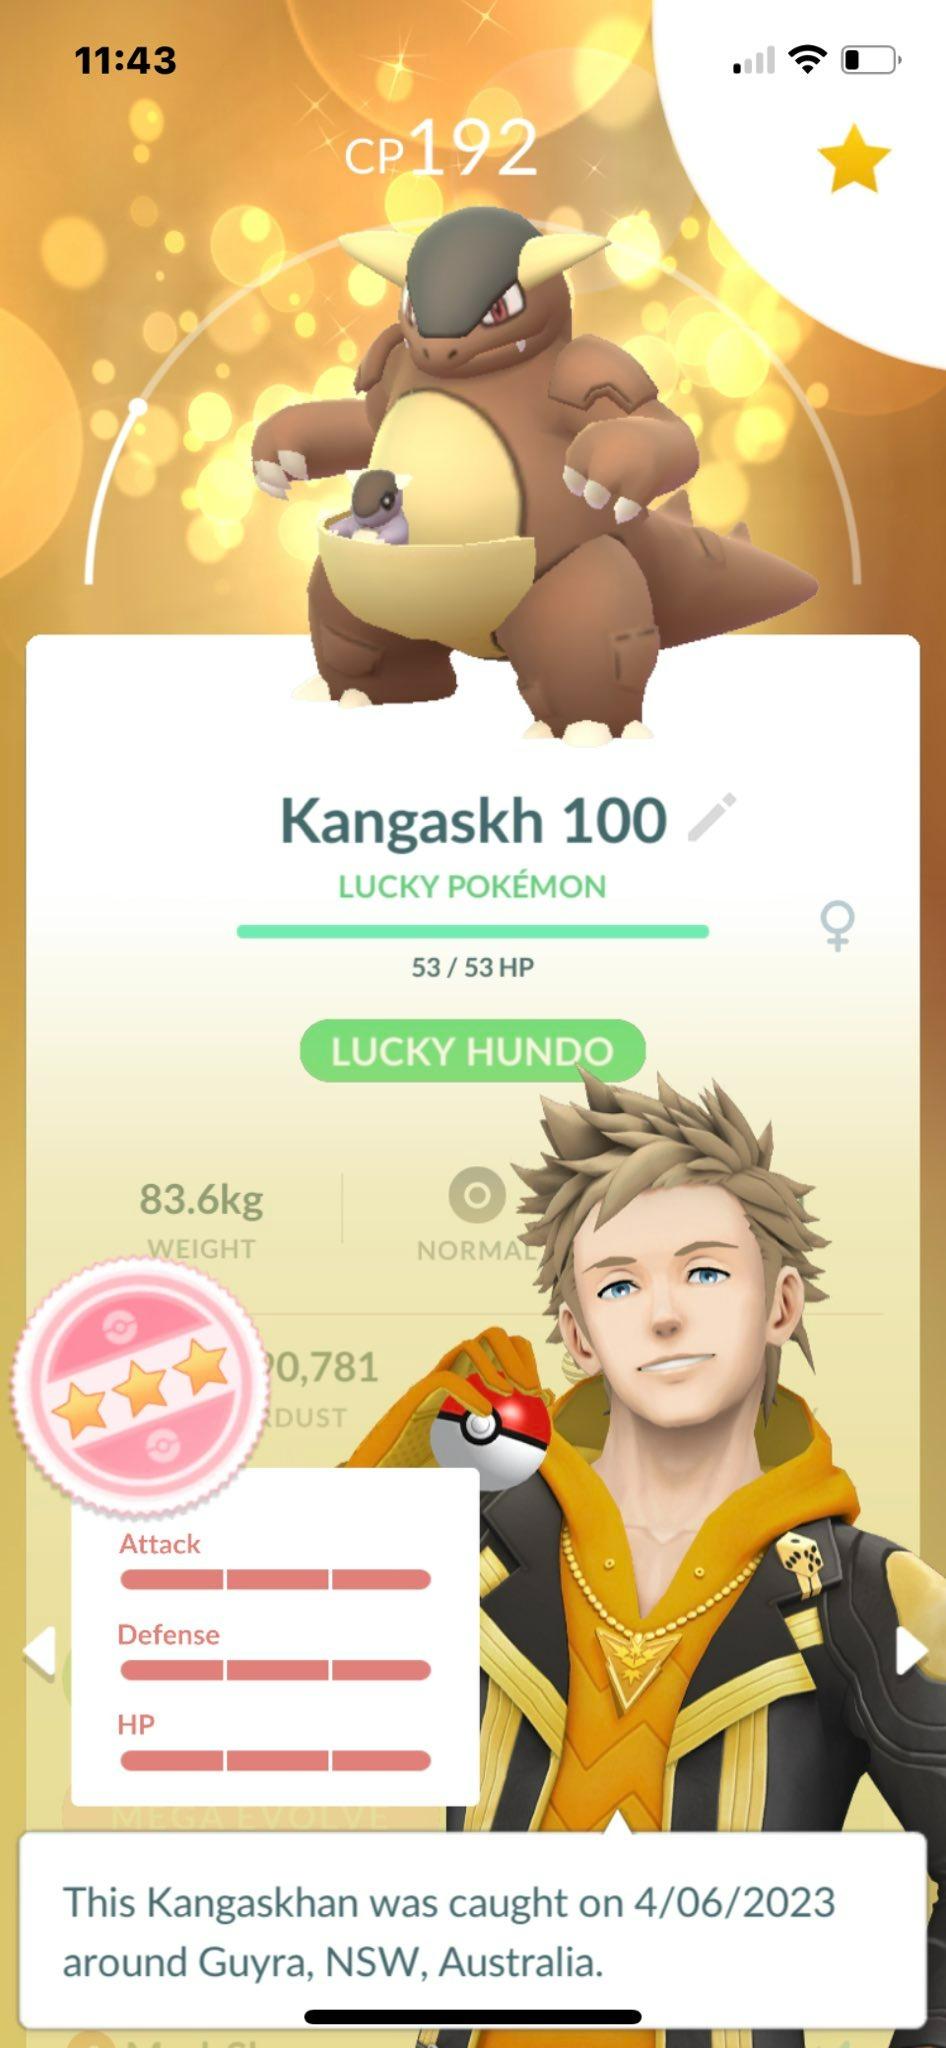 0115 Kangaskhan - Chance or Guaranteed Lucky - Pokemon Go